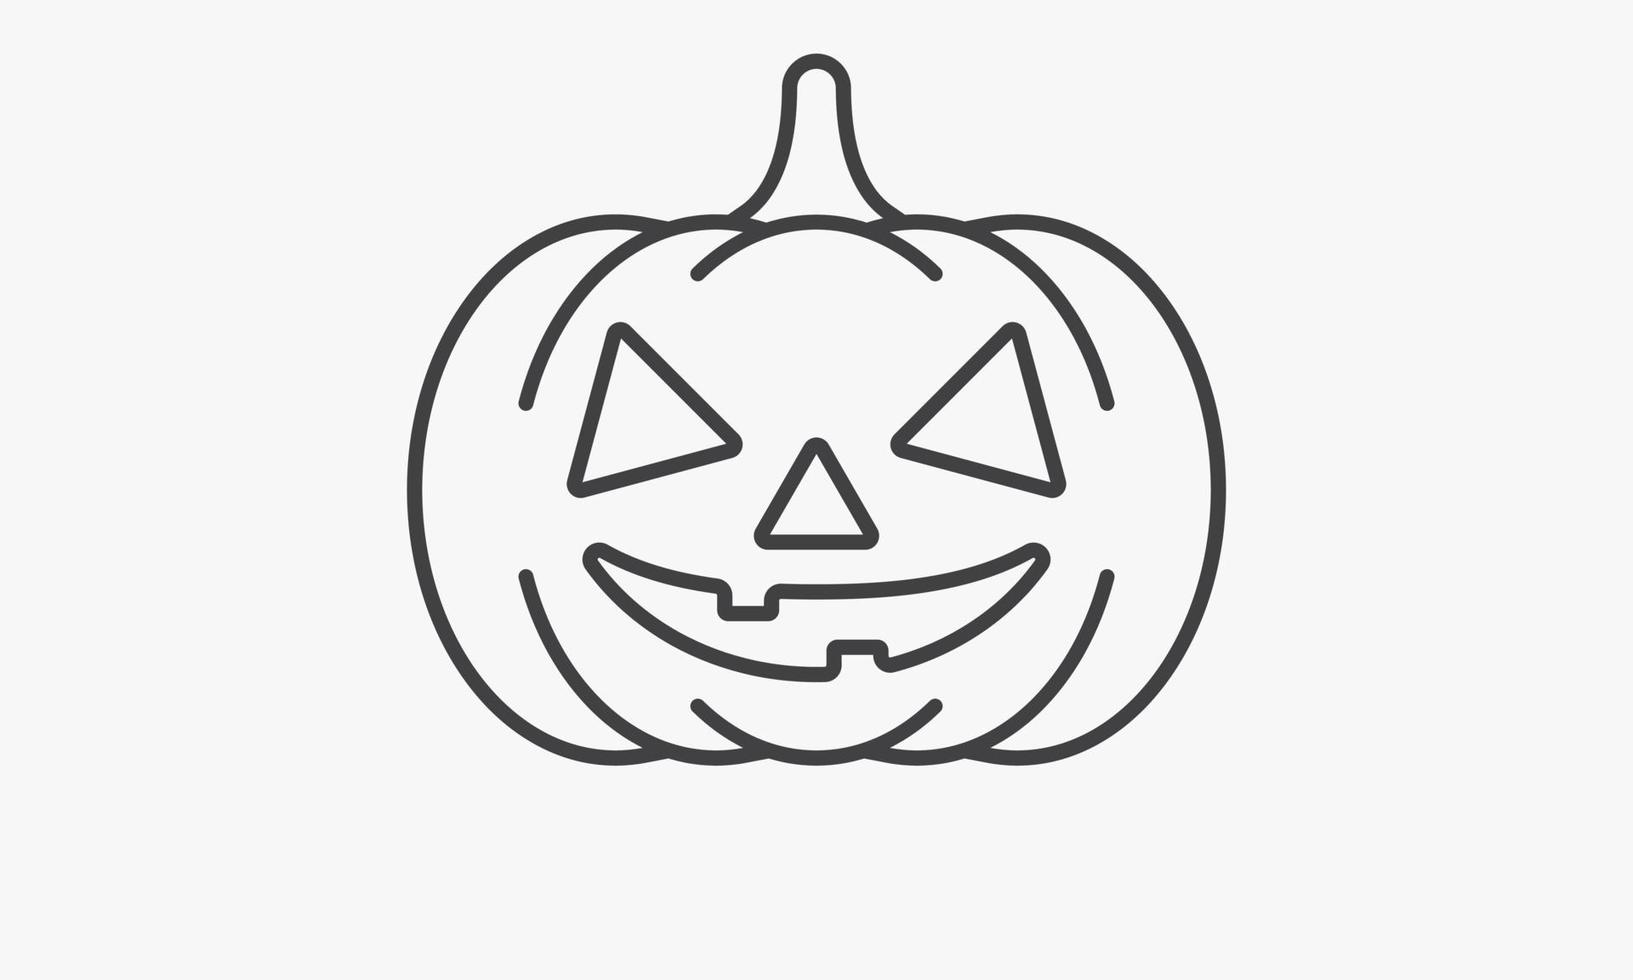 pumpkin smile outline icon design vector illustration.